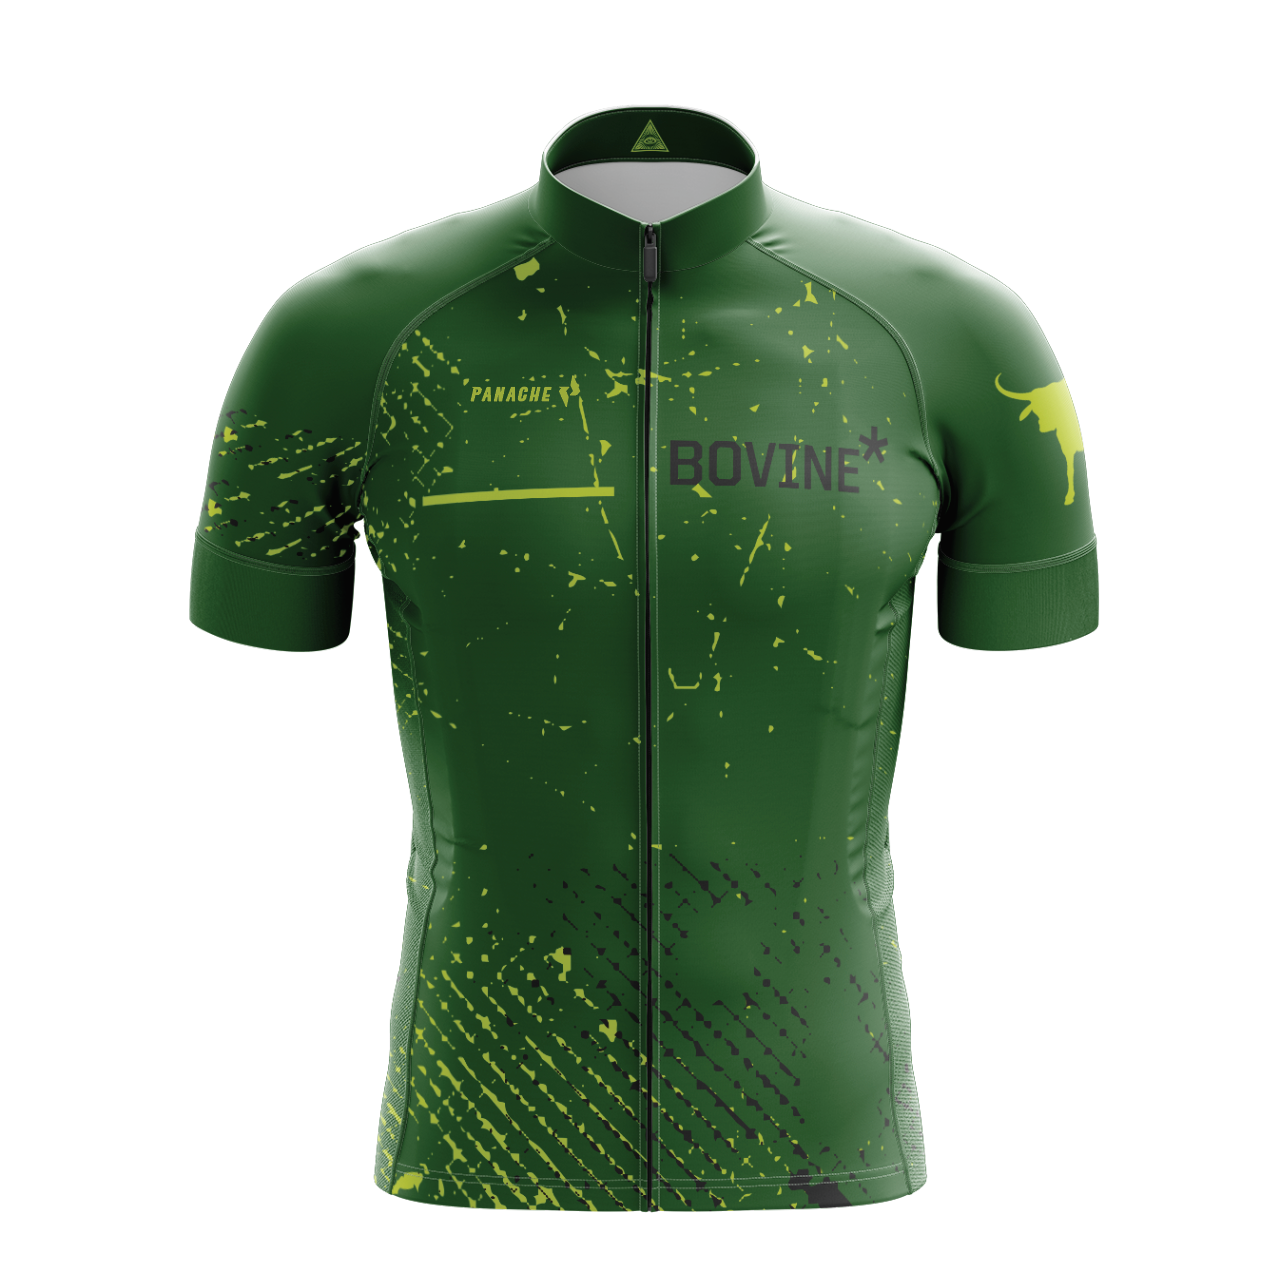 ABovine24 - Men's Pro Super Jersey - Verde